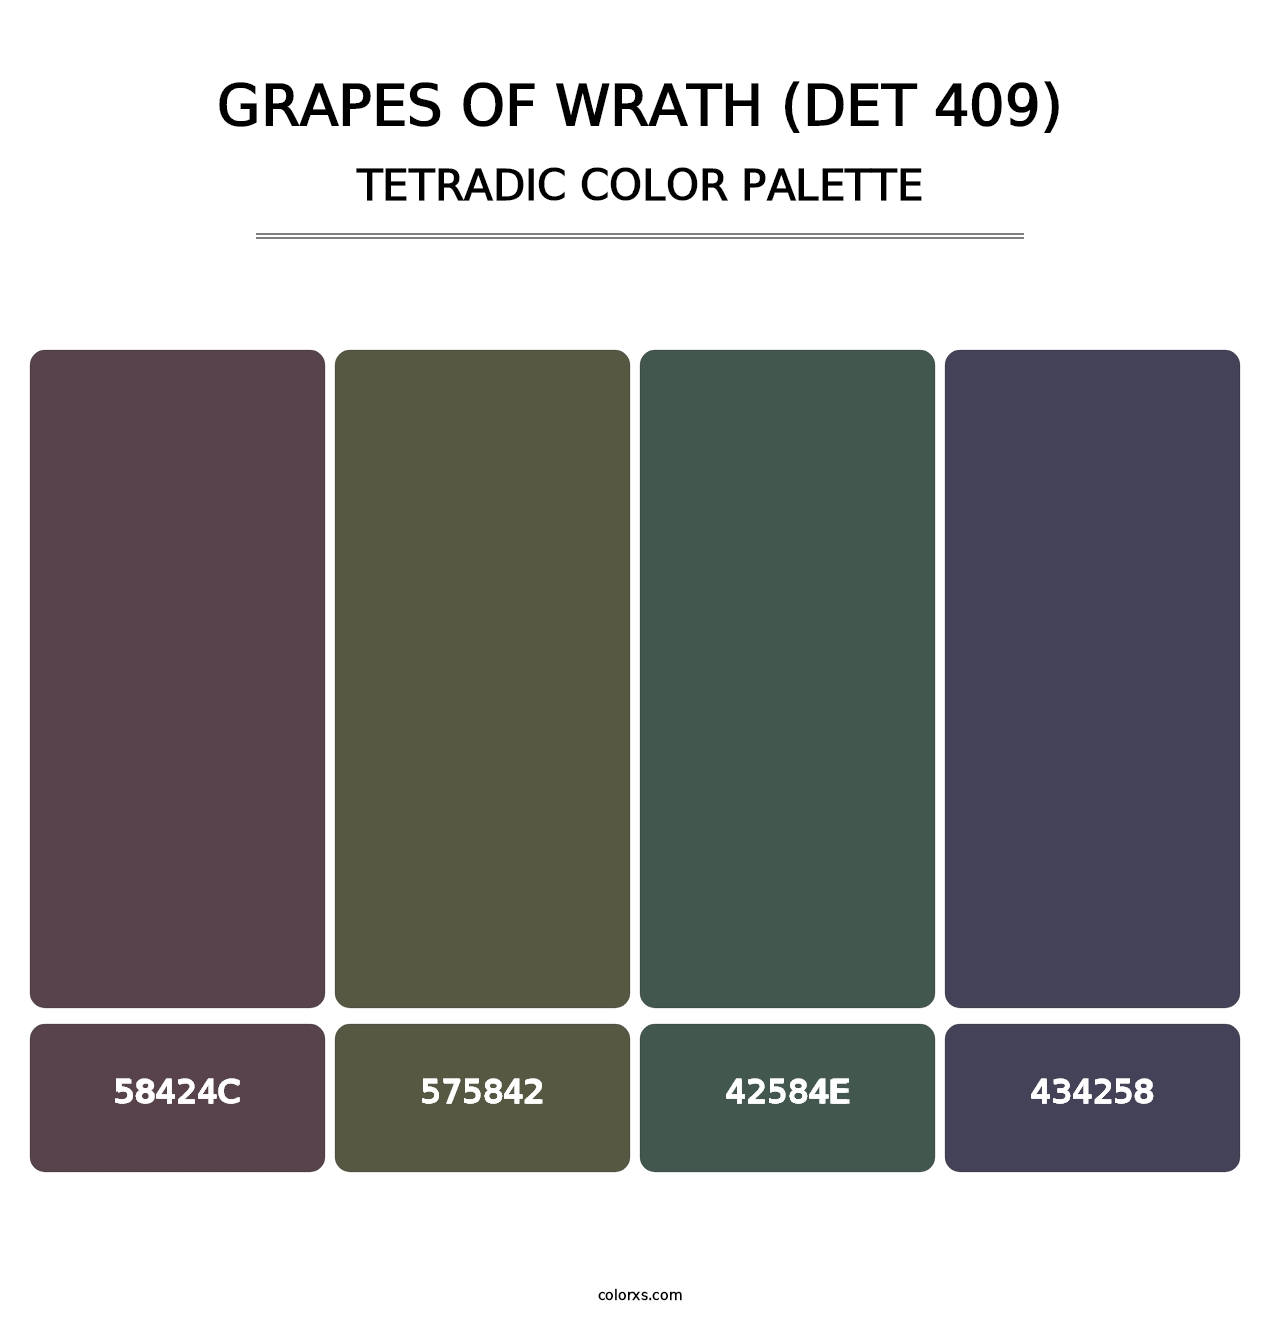 Grapes of Wrath (DET 409) - Tetradic Color Palette